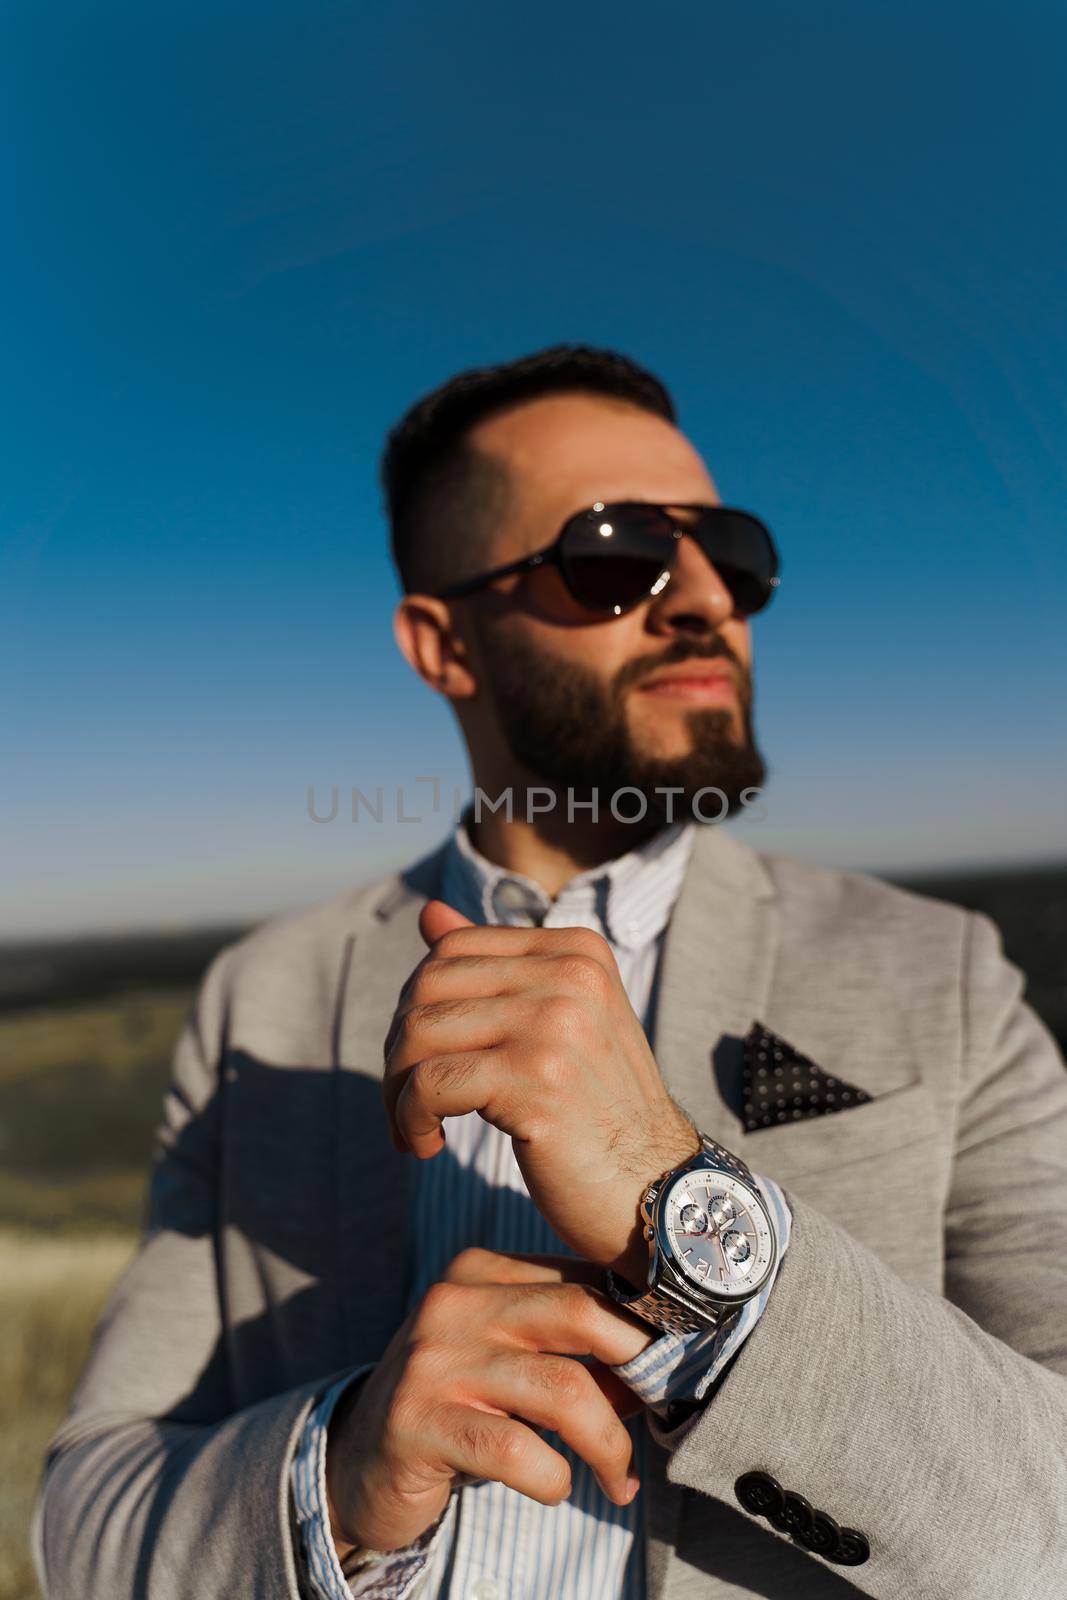 Handsome bearded arabian man in sunglasses on the blue sky background. Confident muslim business man. Arab man weared in grey coat